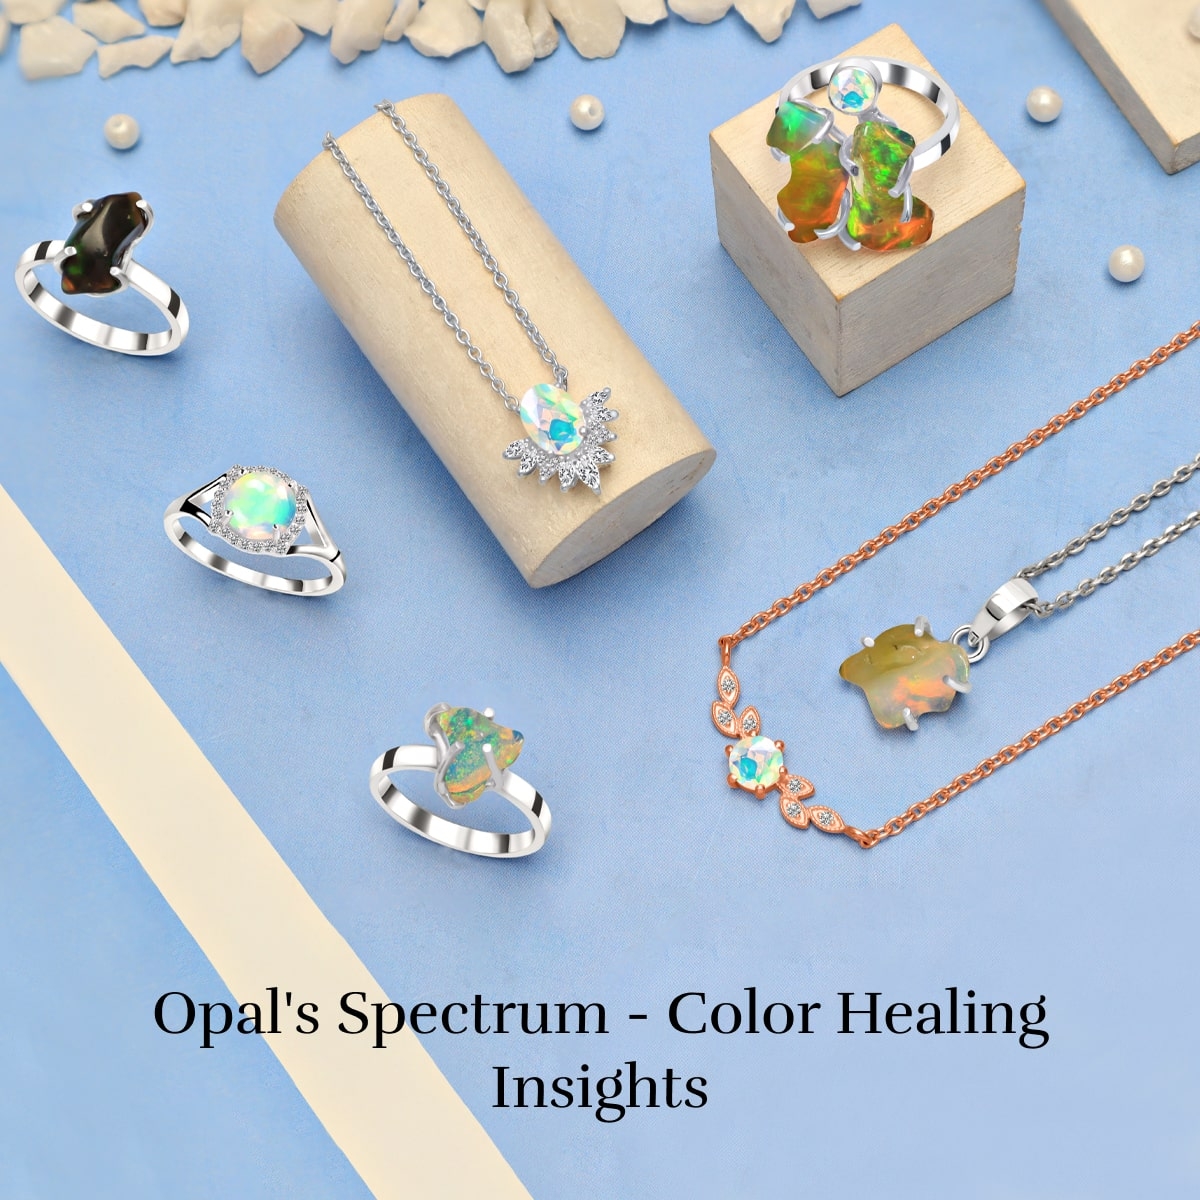 Colour Healing Properties of Opal